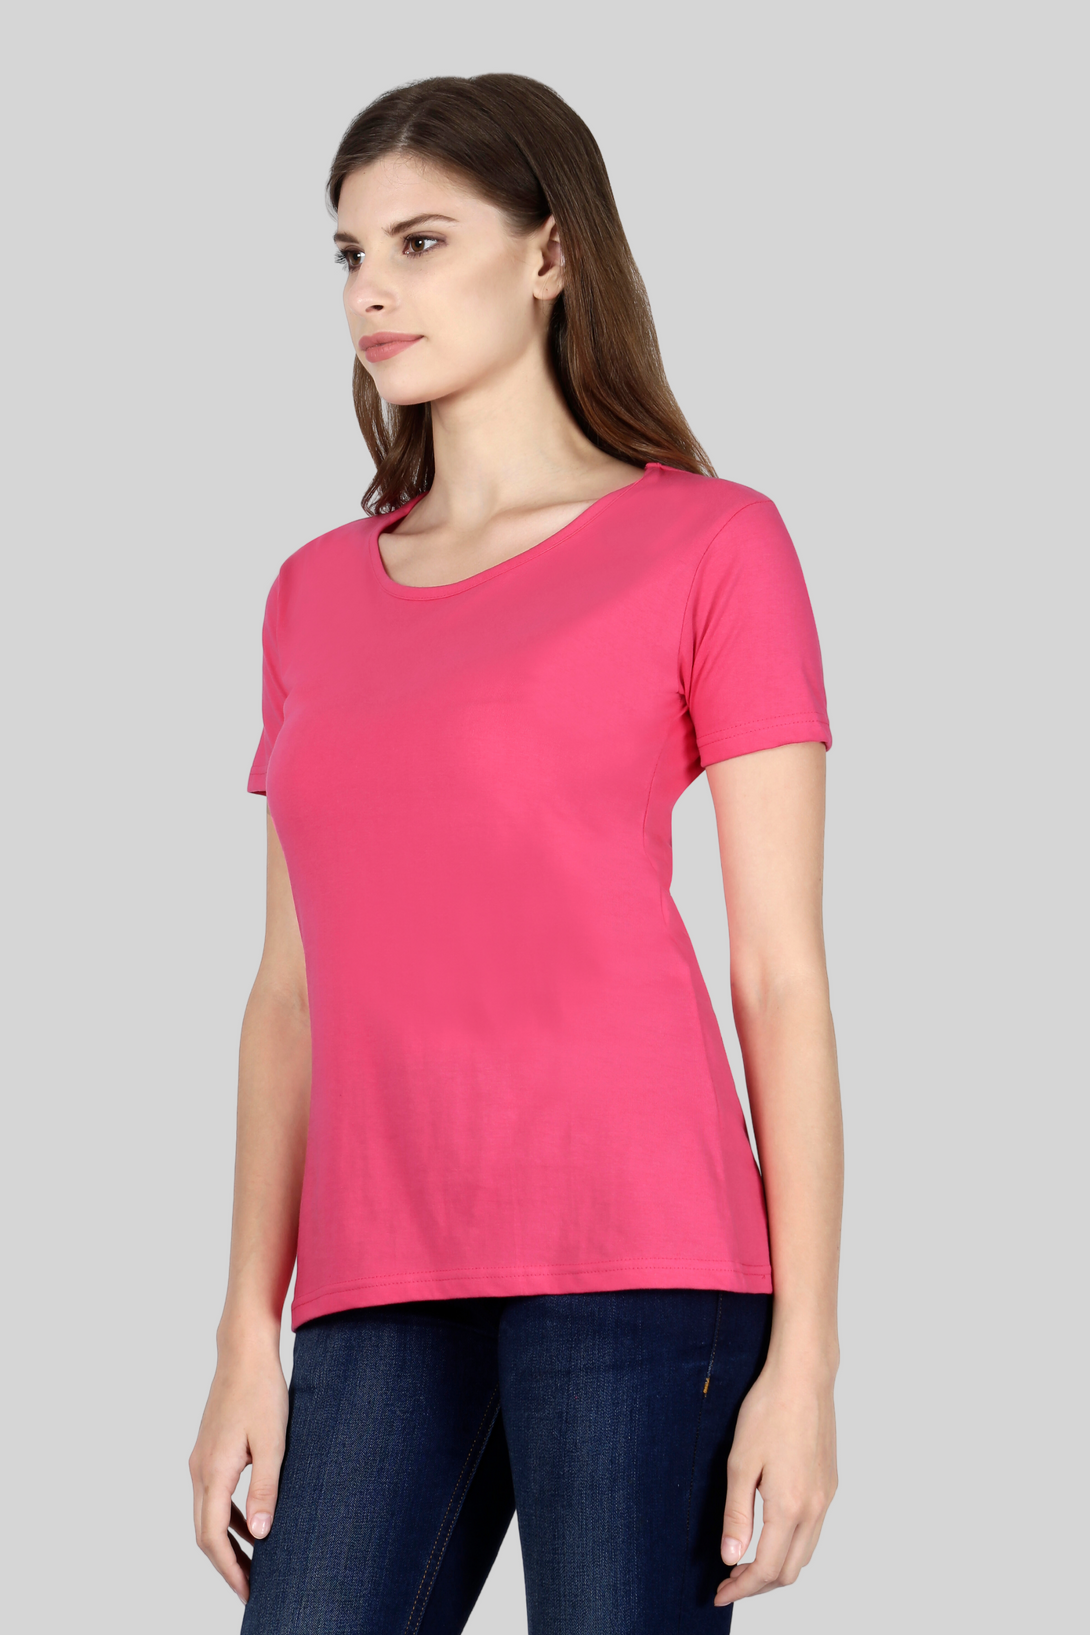 Pink Scoop Neck T-Shirt For Women - WowWaves